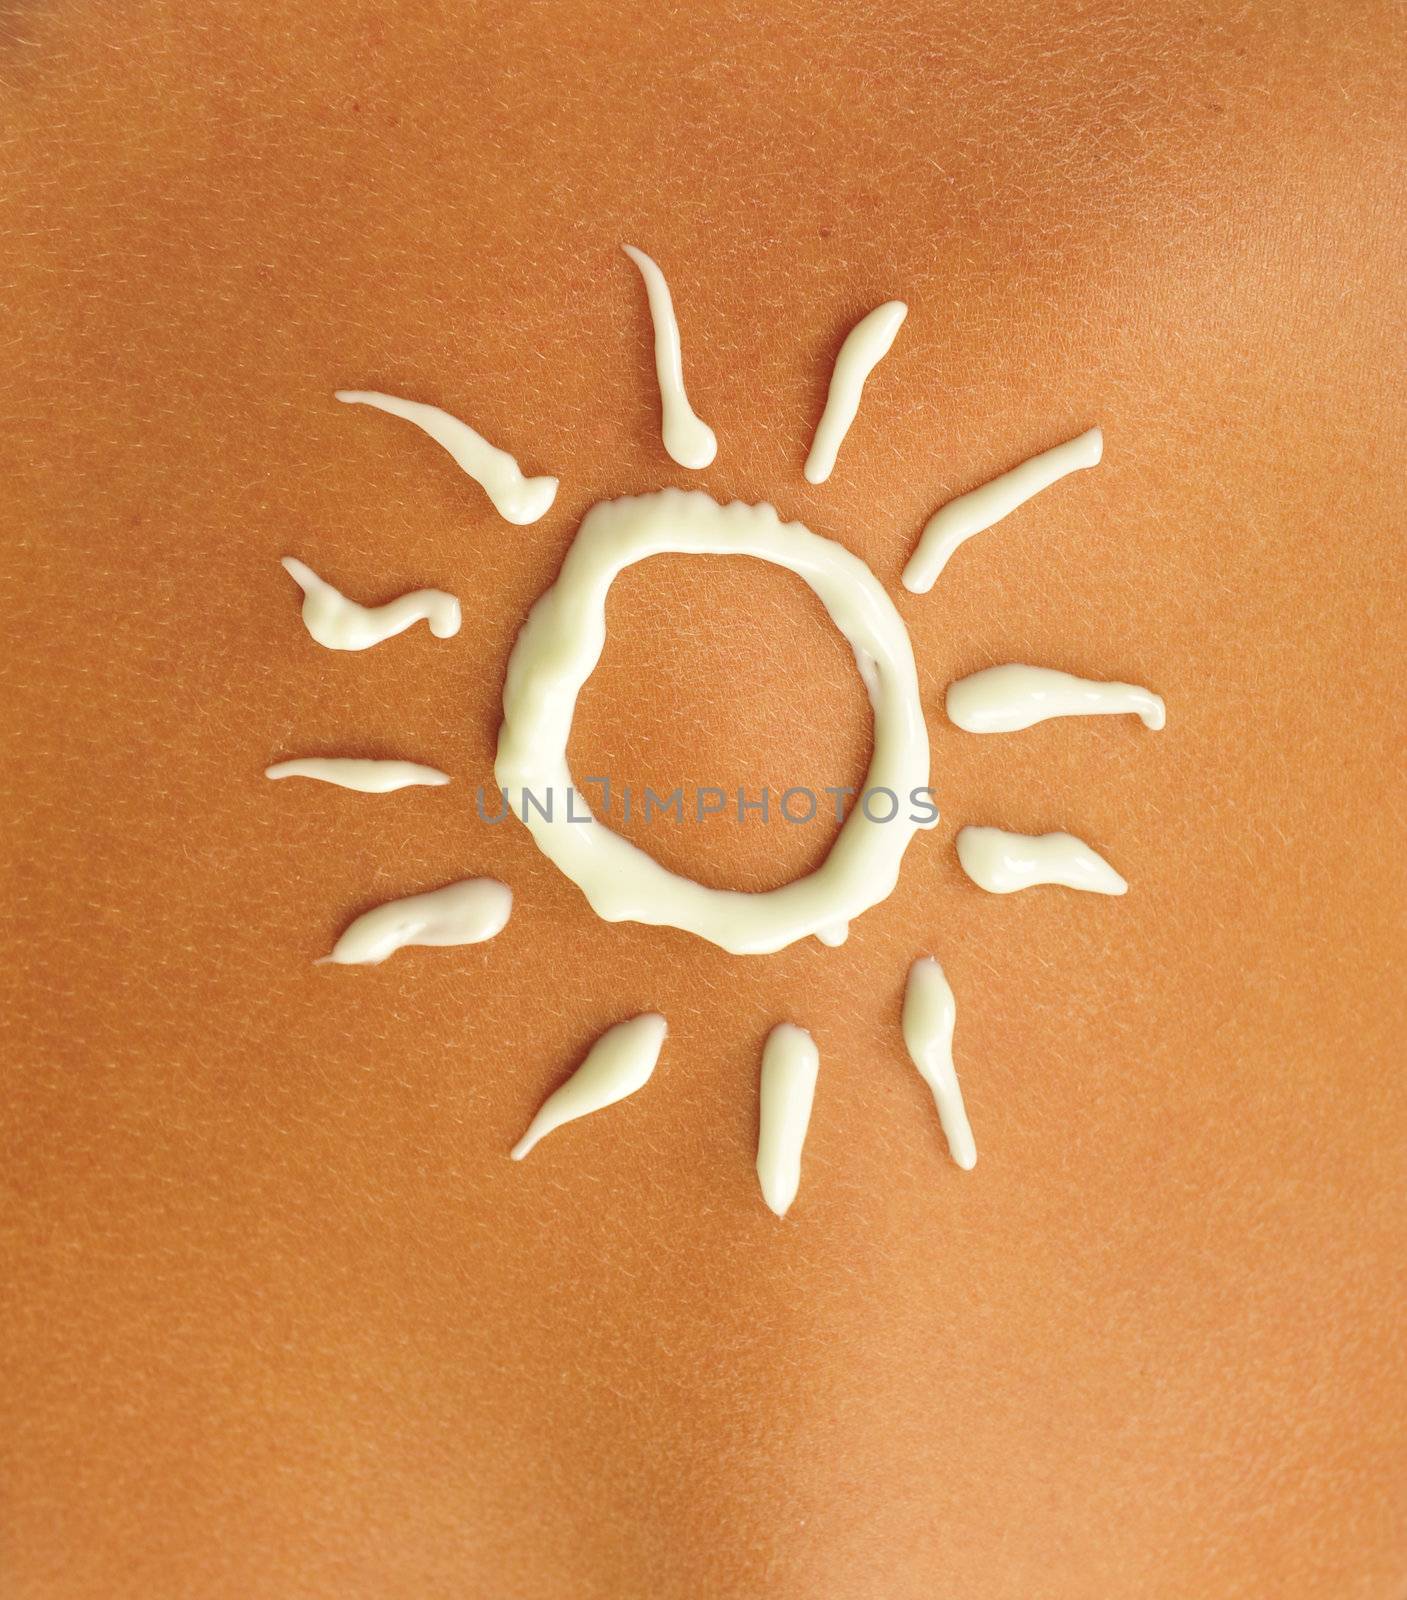 cream sun on a tanned skin